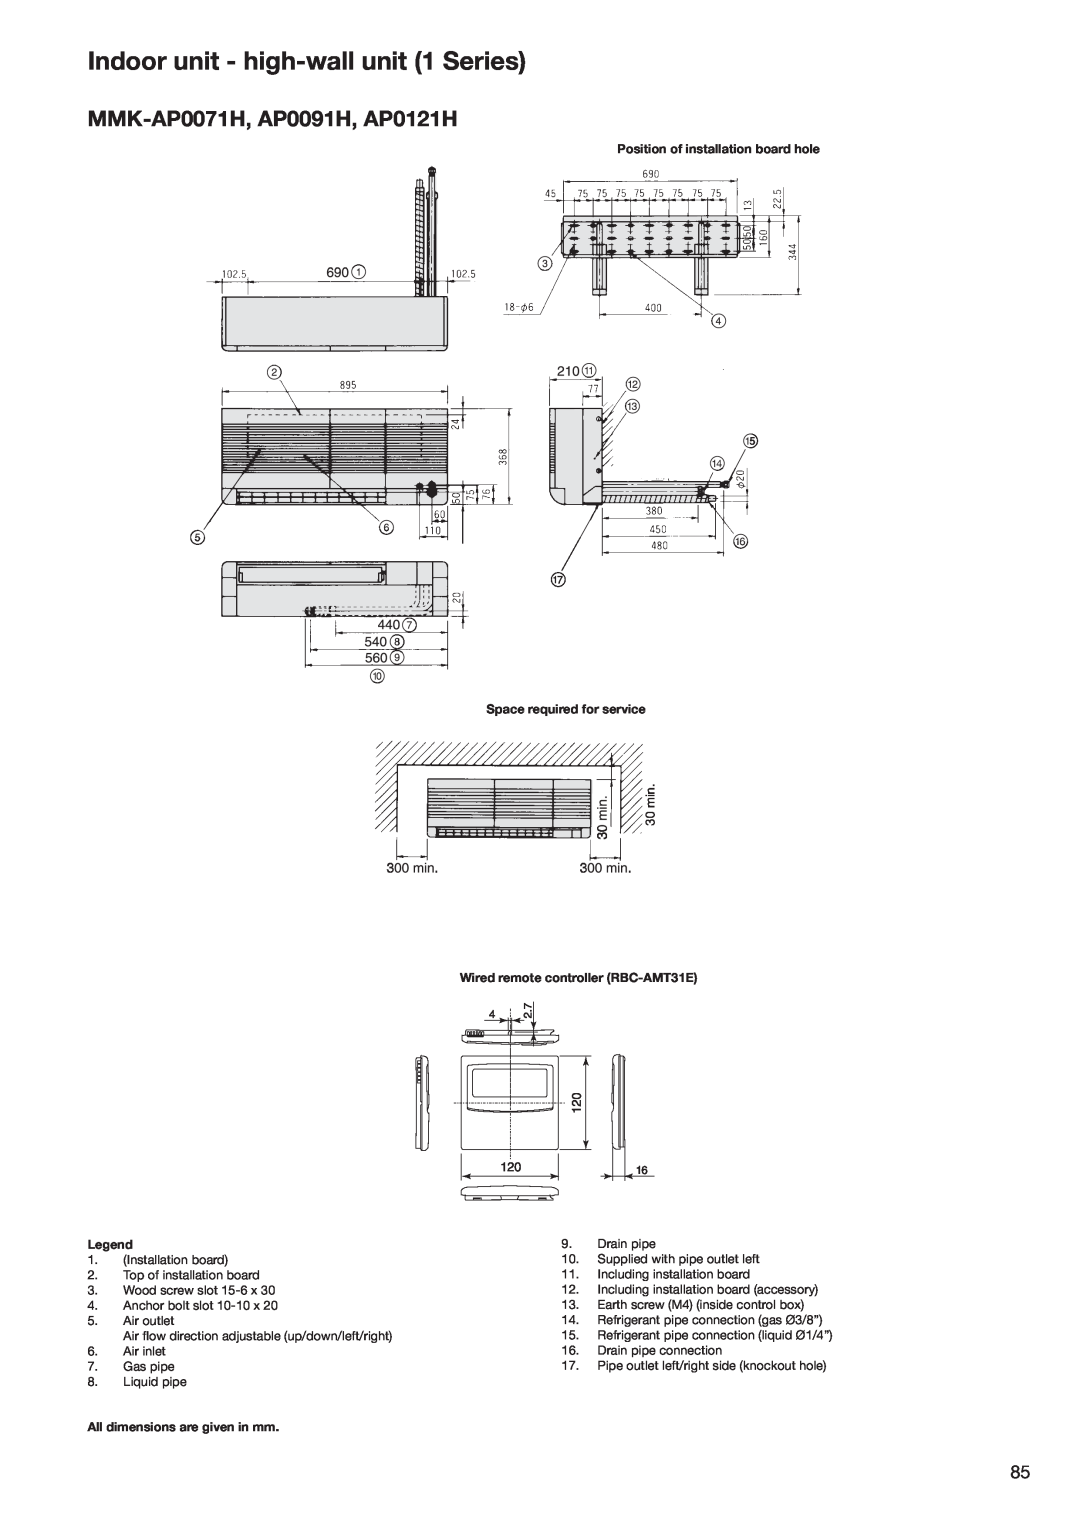 Toshiba HFC R-410A manual Indoor unit - high-wallunit 1 Series, MMK-AP0071H,AP0091H, AP0121H 